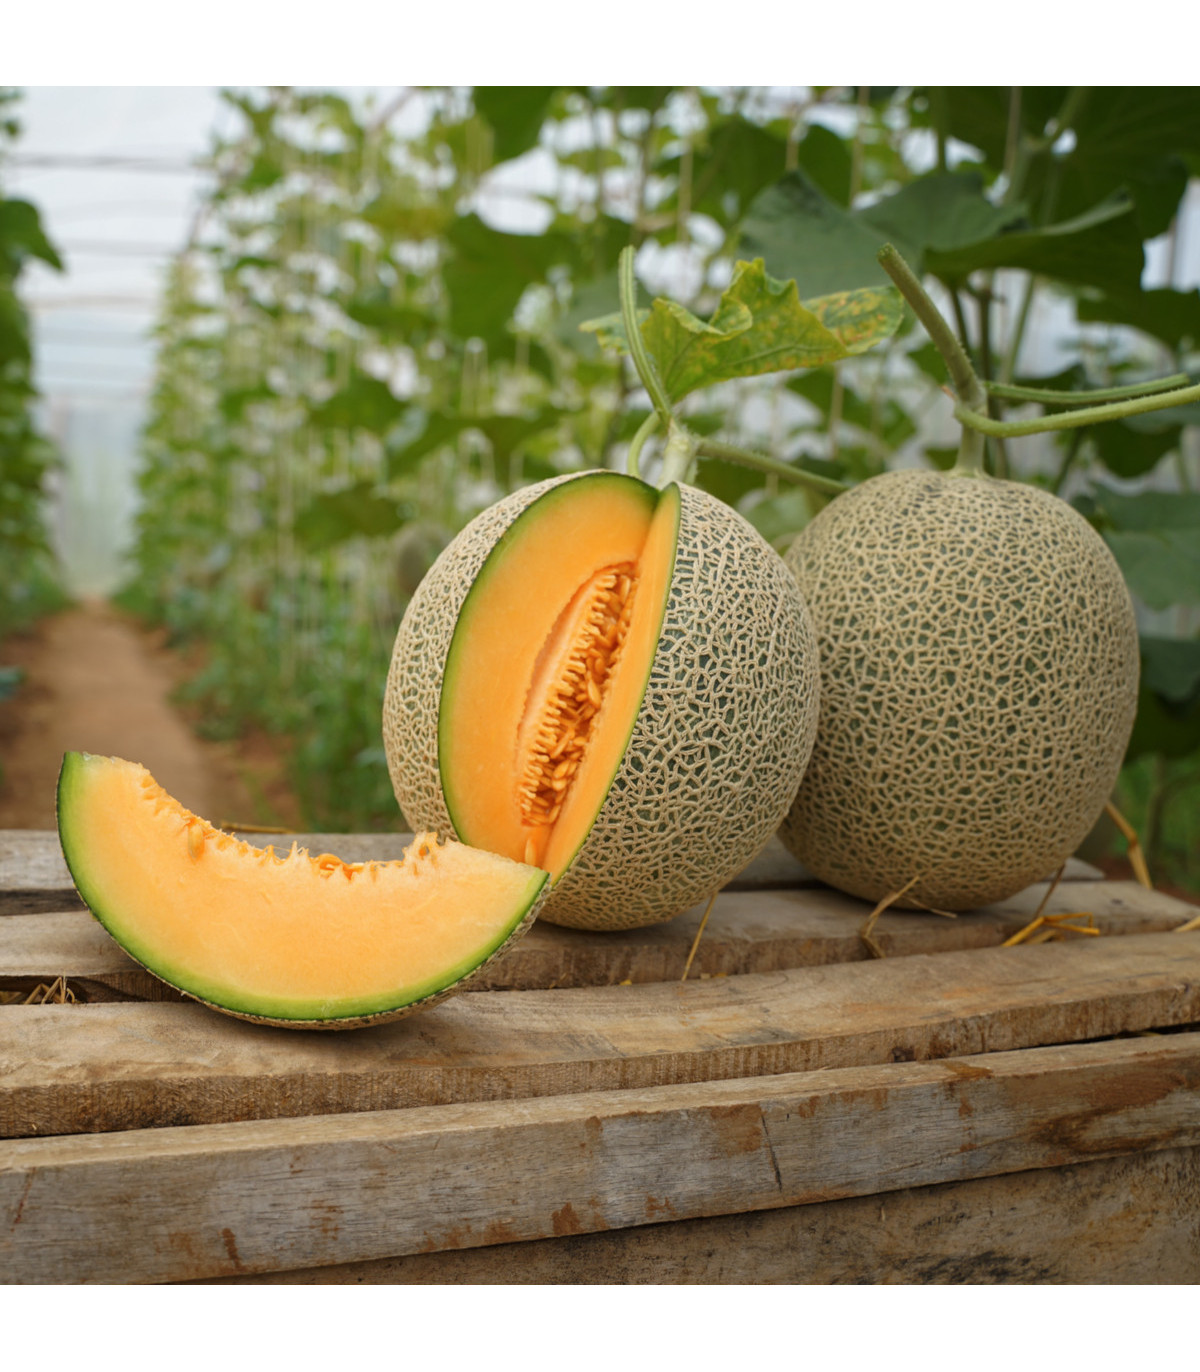 Melón Cantaloupe - predaj semien melónu - 5 ks